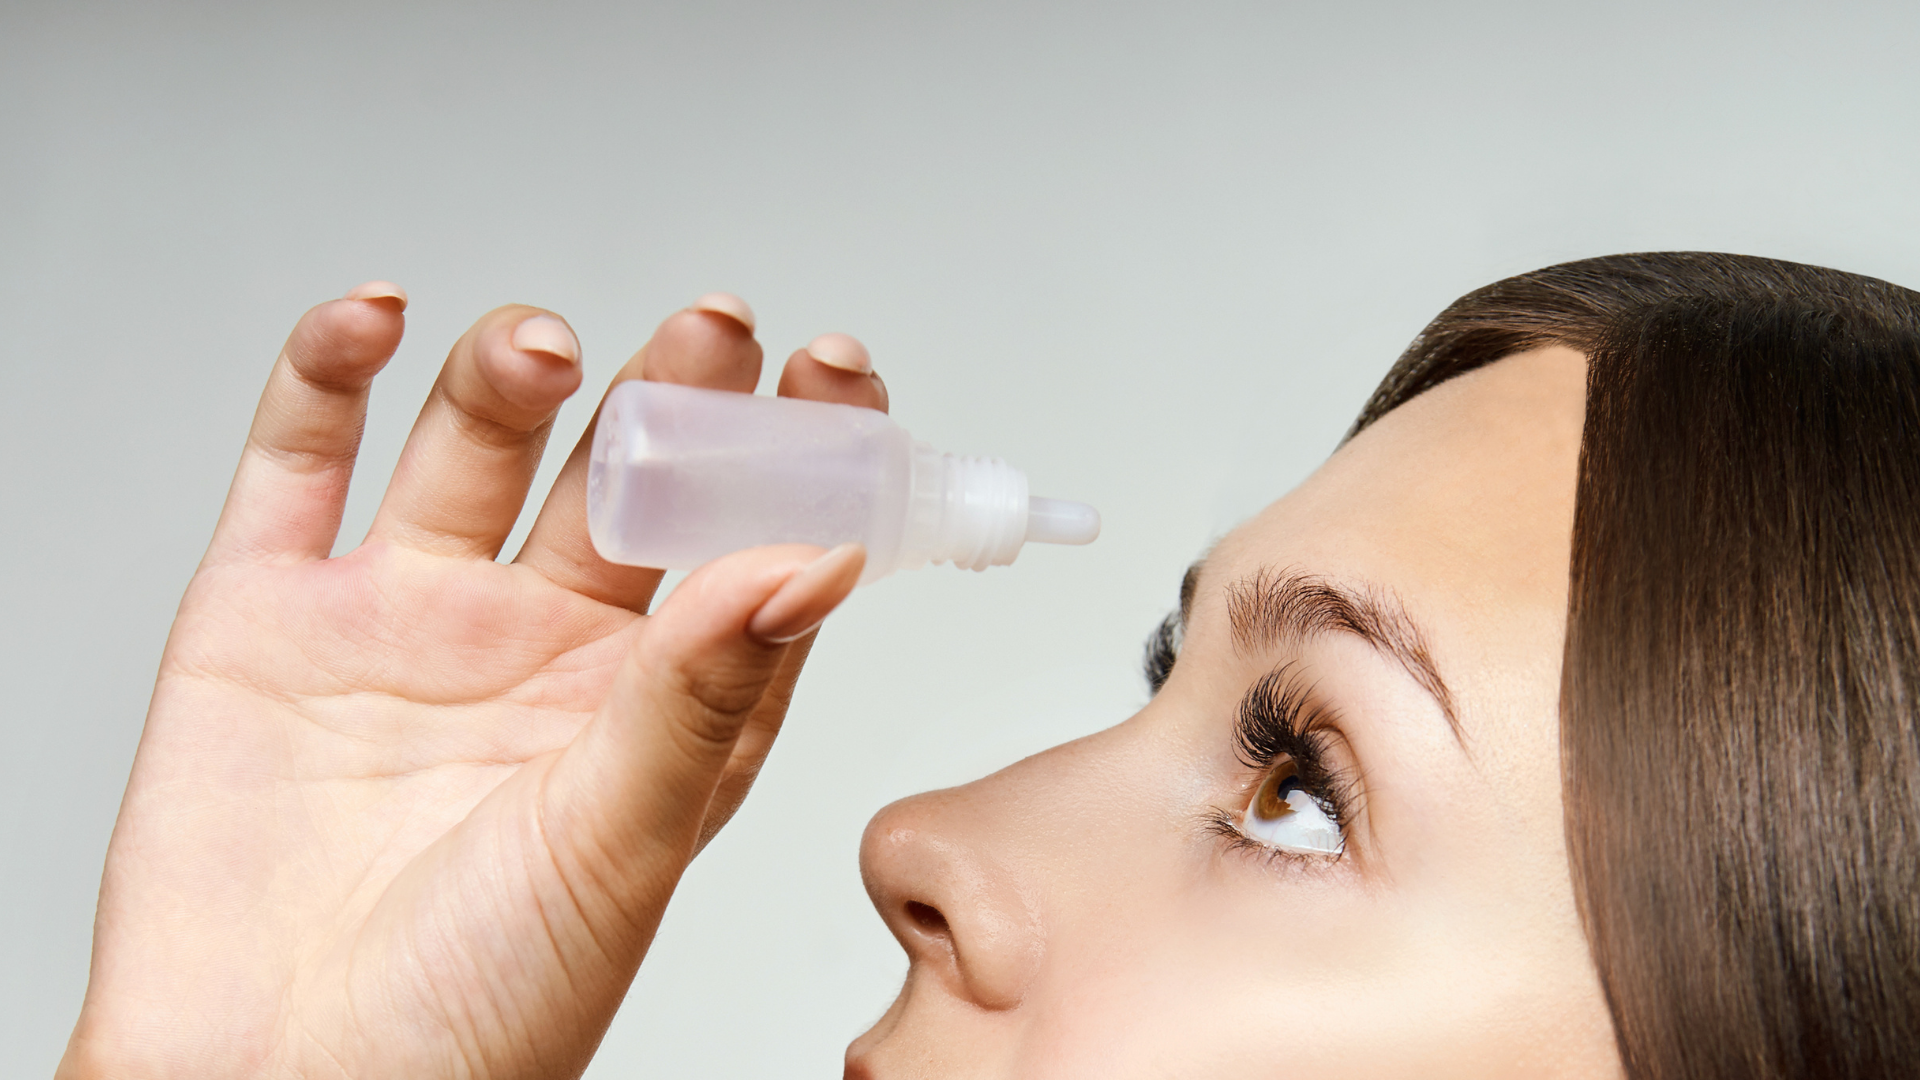 Can Overusing Eye Drops Be Harmful?